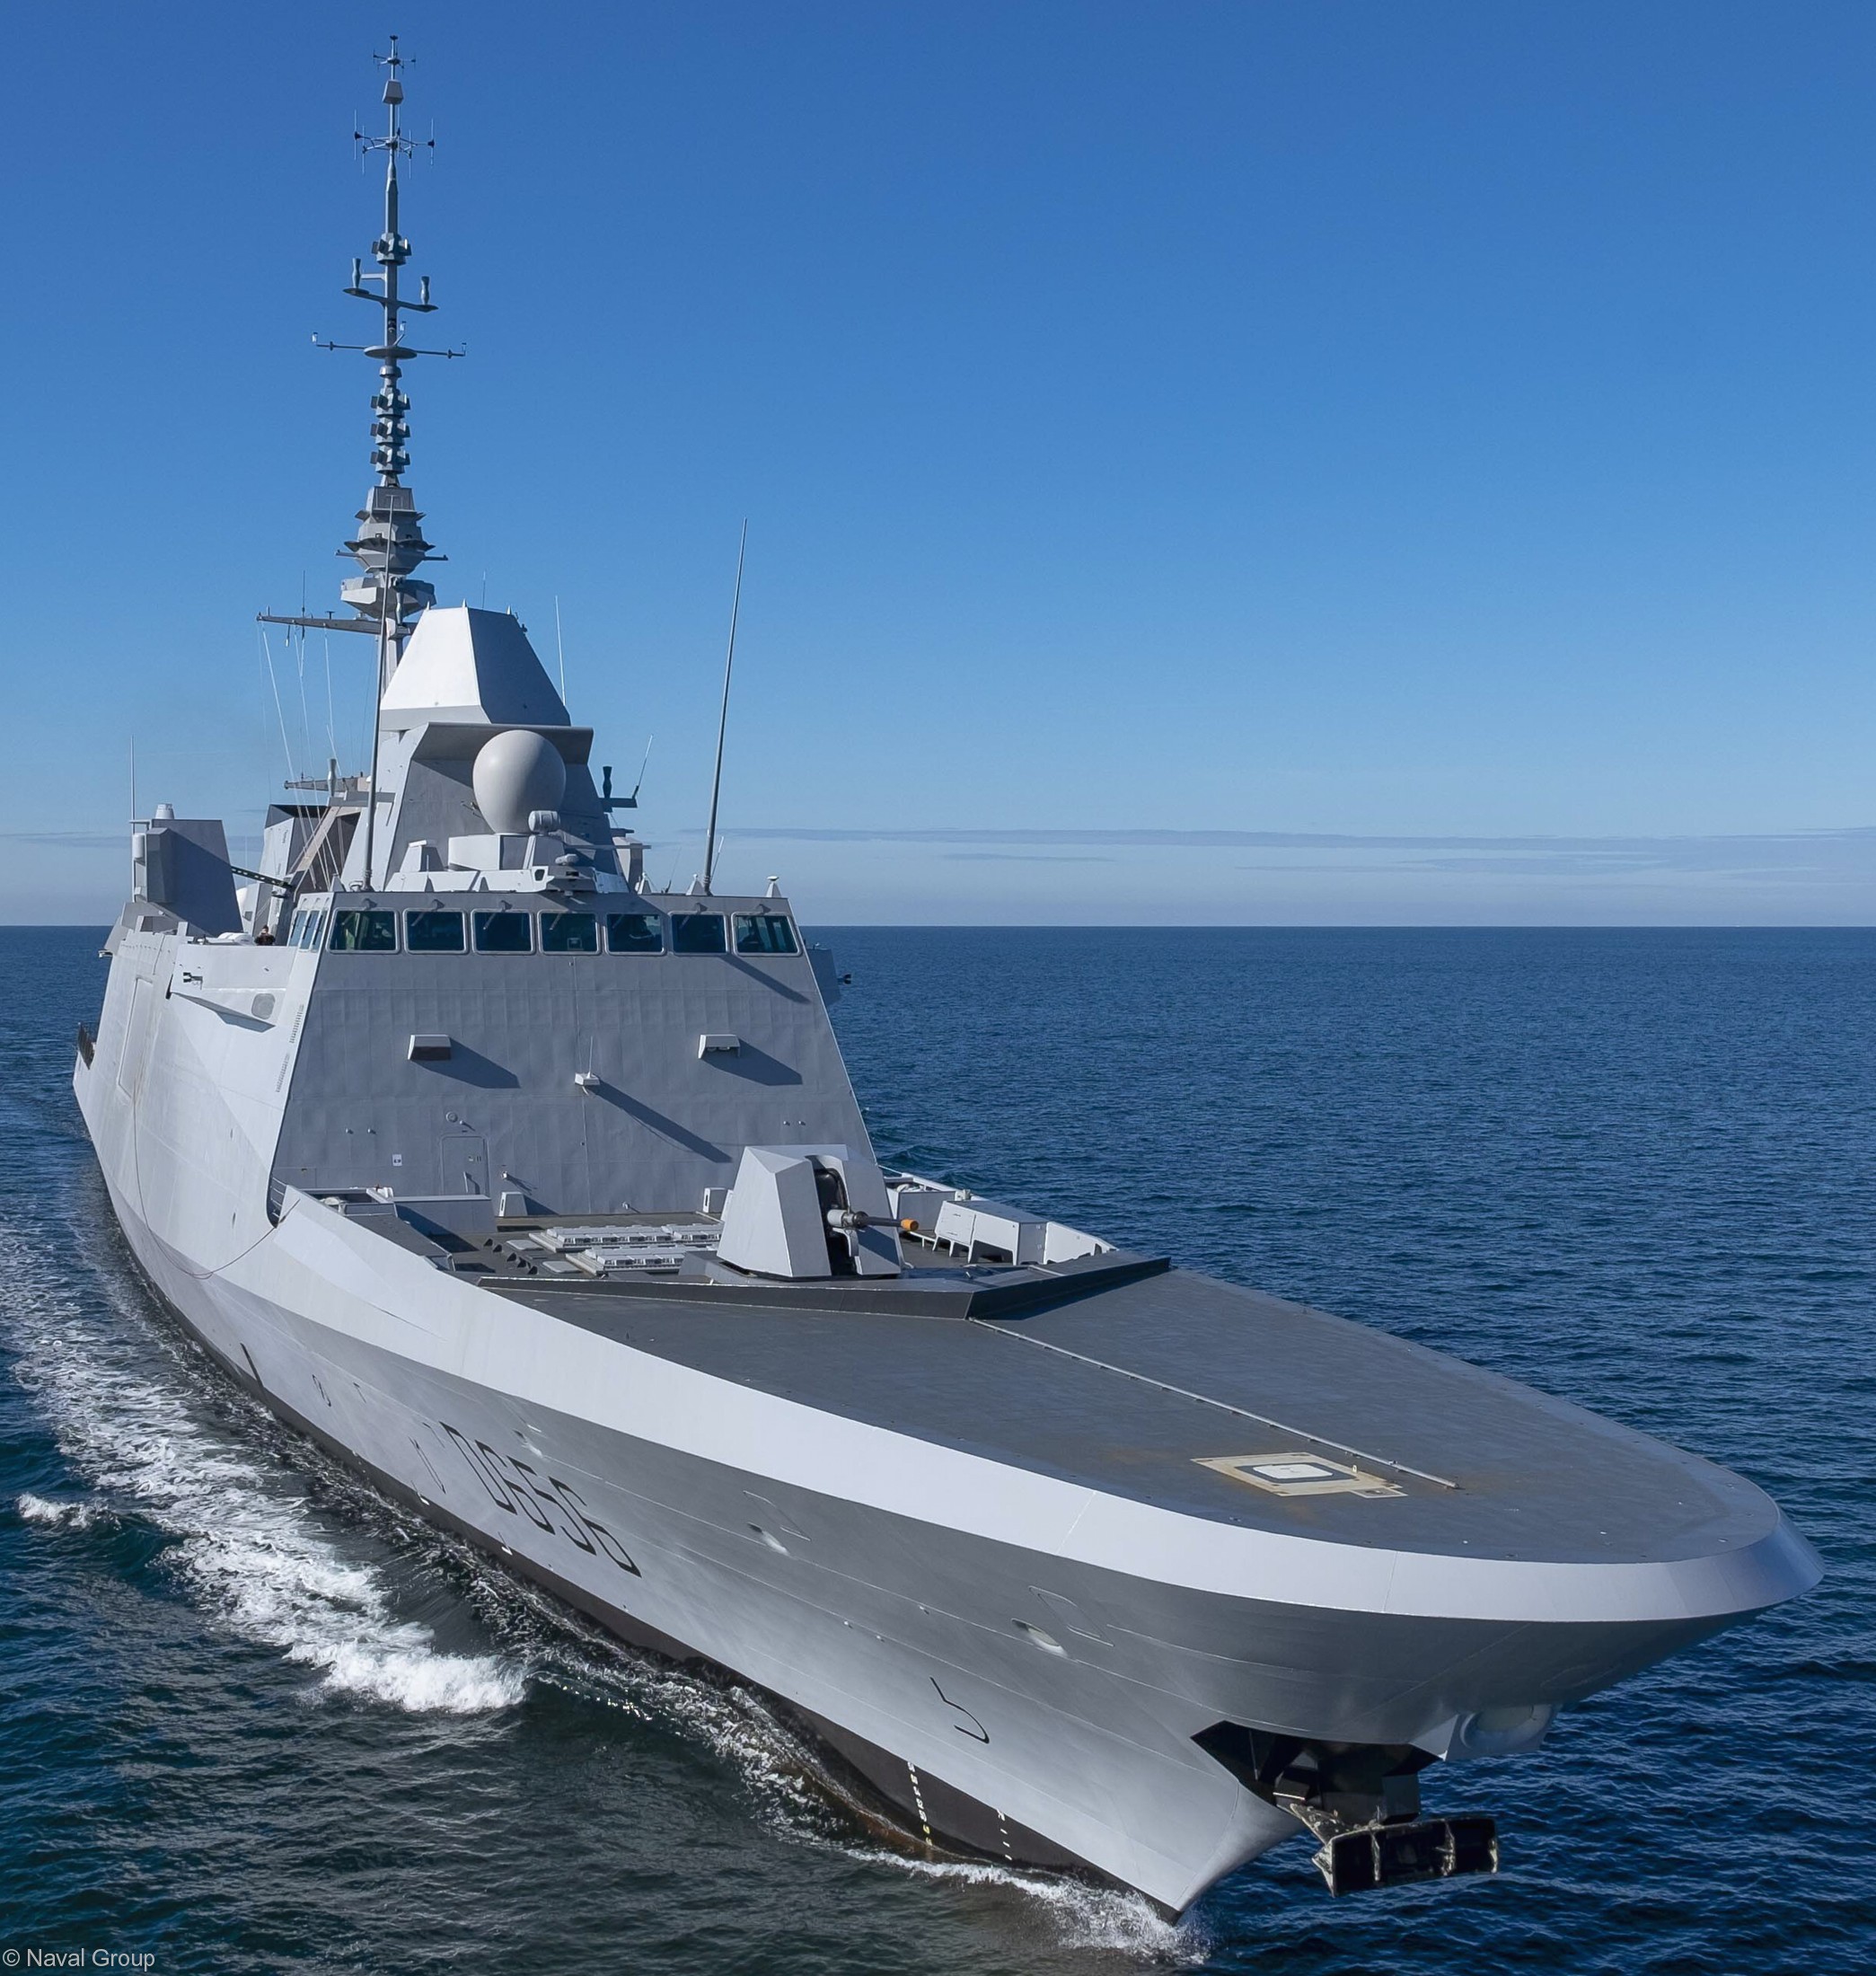 d-656 fs alsace fremm aquitaine class frigate fregate multi purpose french navy marine nationale 04